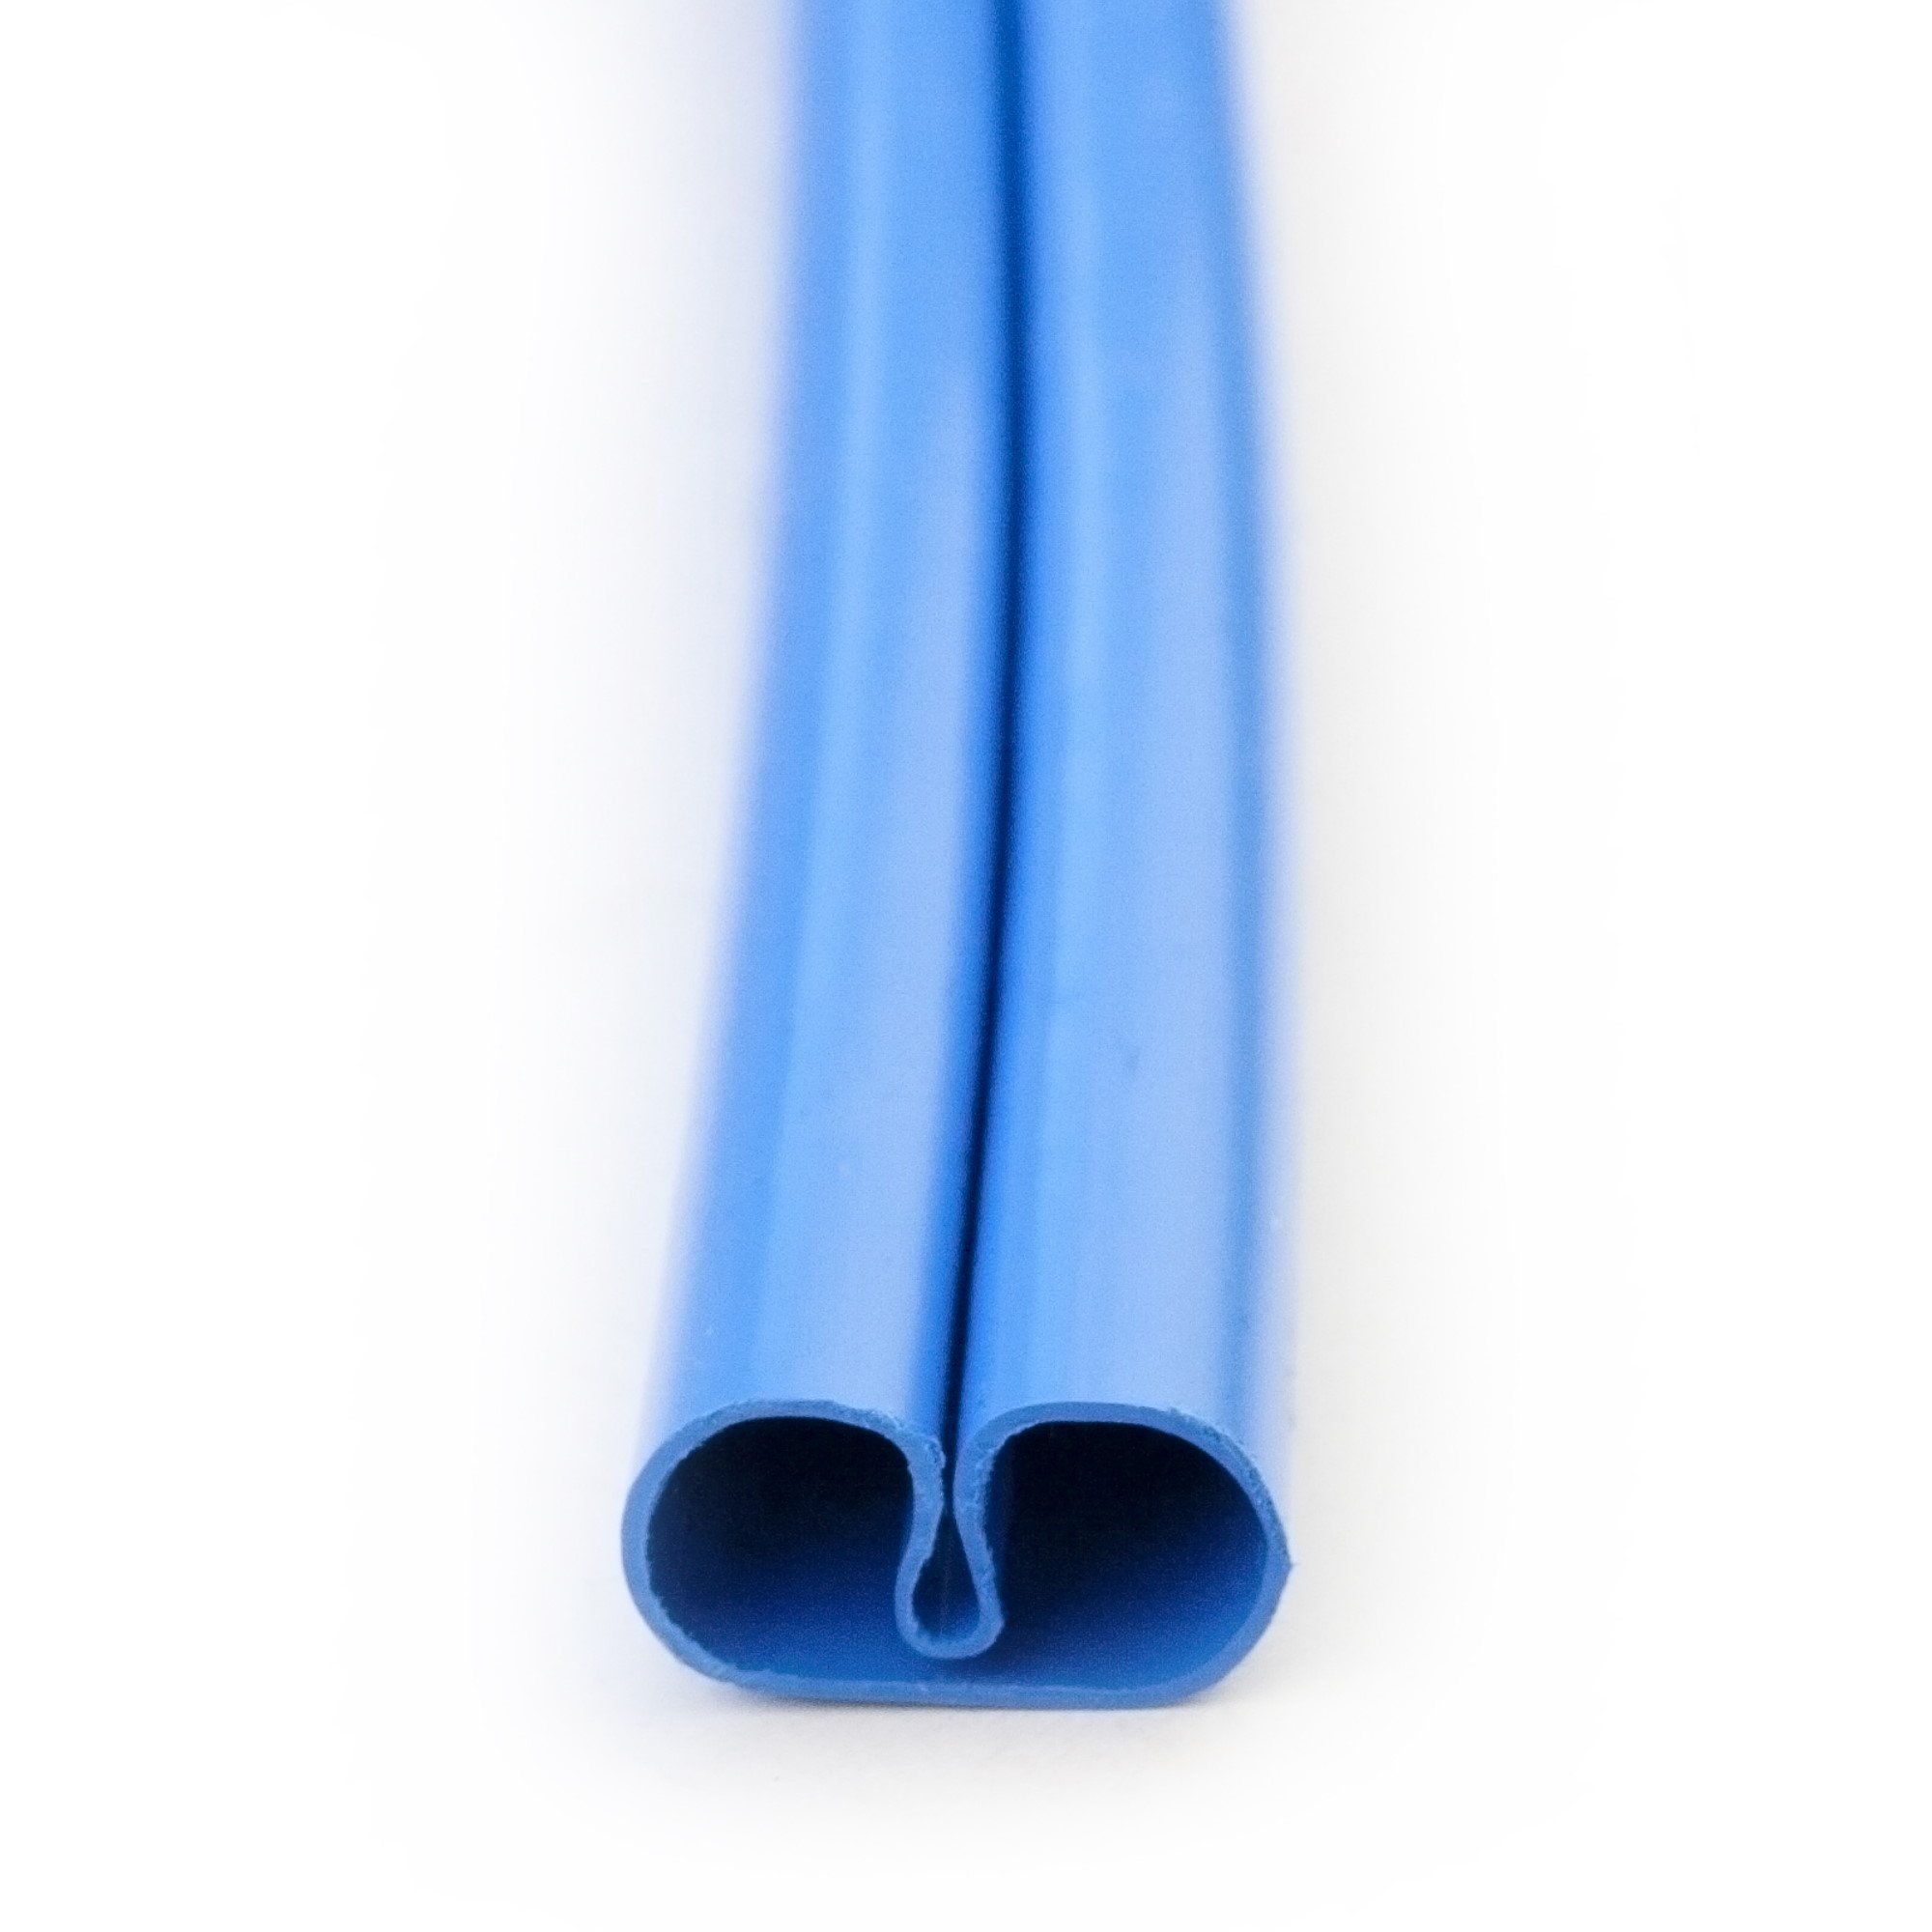 Stahlwandpool Set (3-teilig) rund 350x120 cm, Stahl 0,4 mm weiß, Folie 0,3 mm blau, Overlap